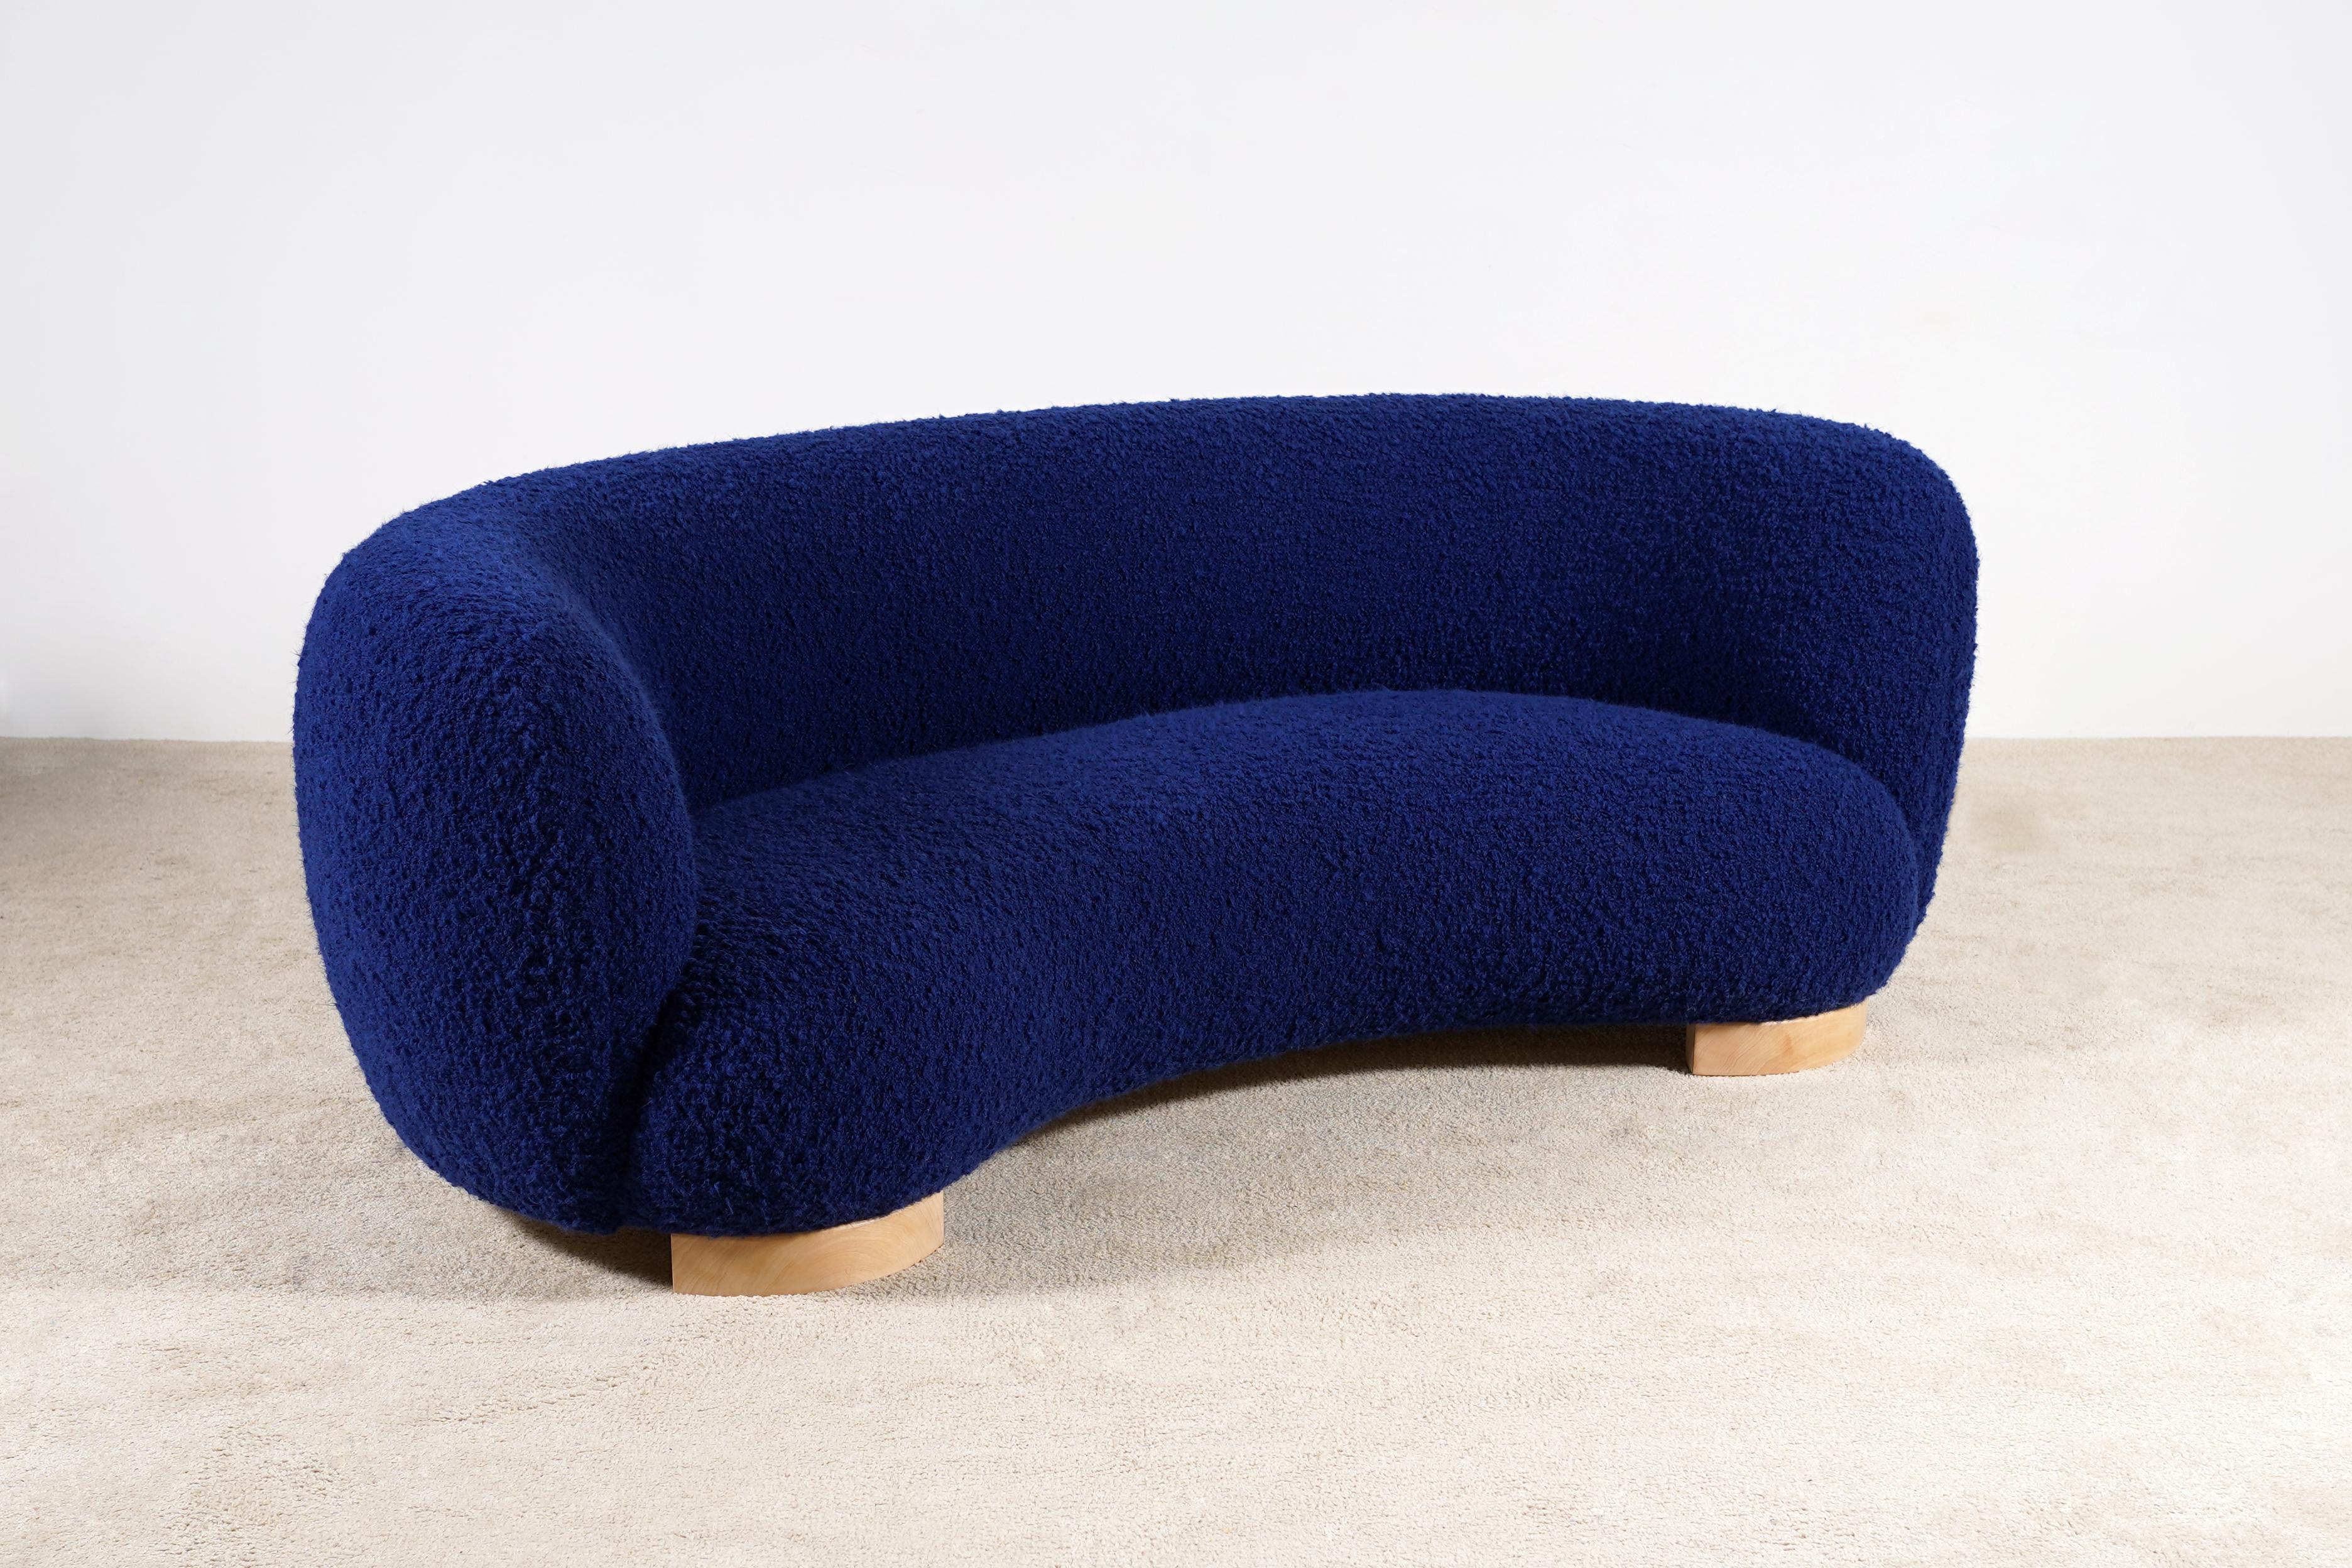 Scandinavian Modern Elegant Three-Seat Danish Curved Sofa from 1940s, New Upholstery